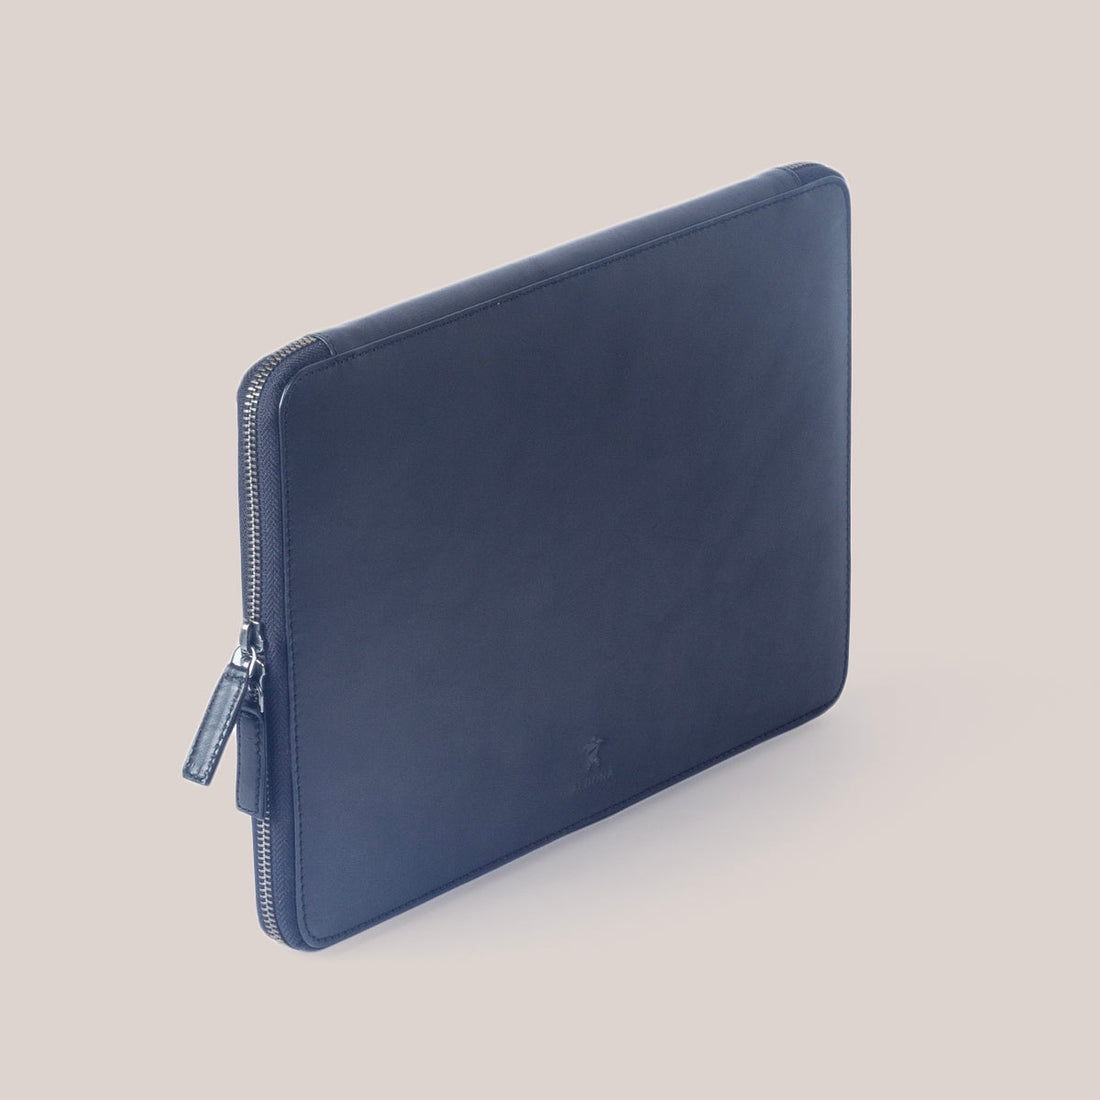 Microsoft Surface Book 15 Zippered Laptop Case - Felt and Tan Crunch